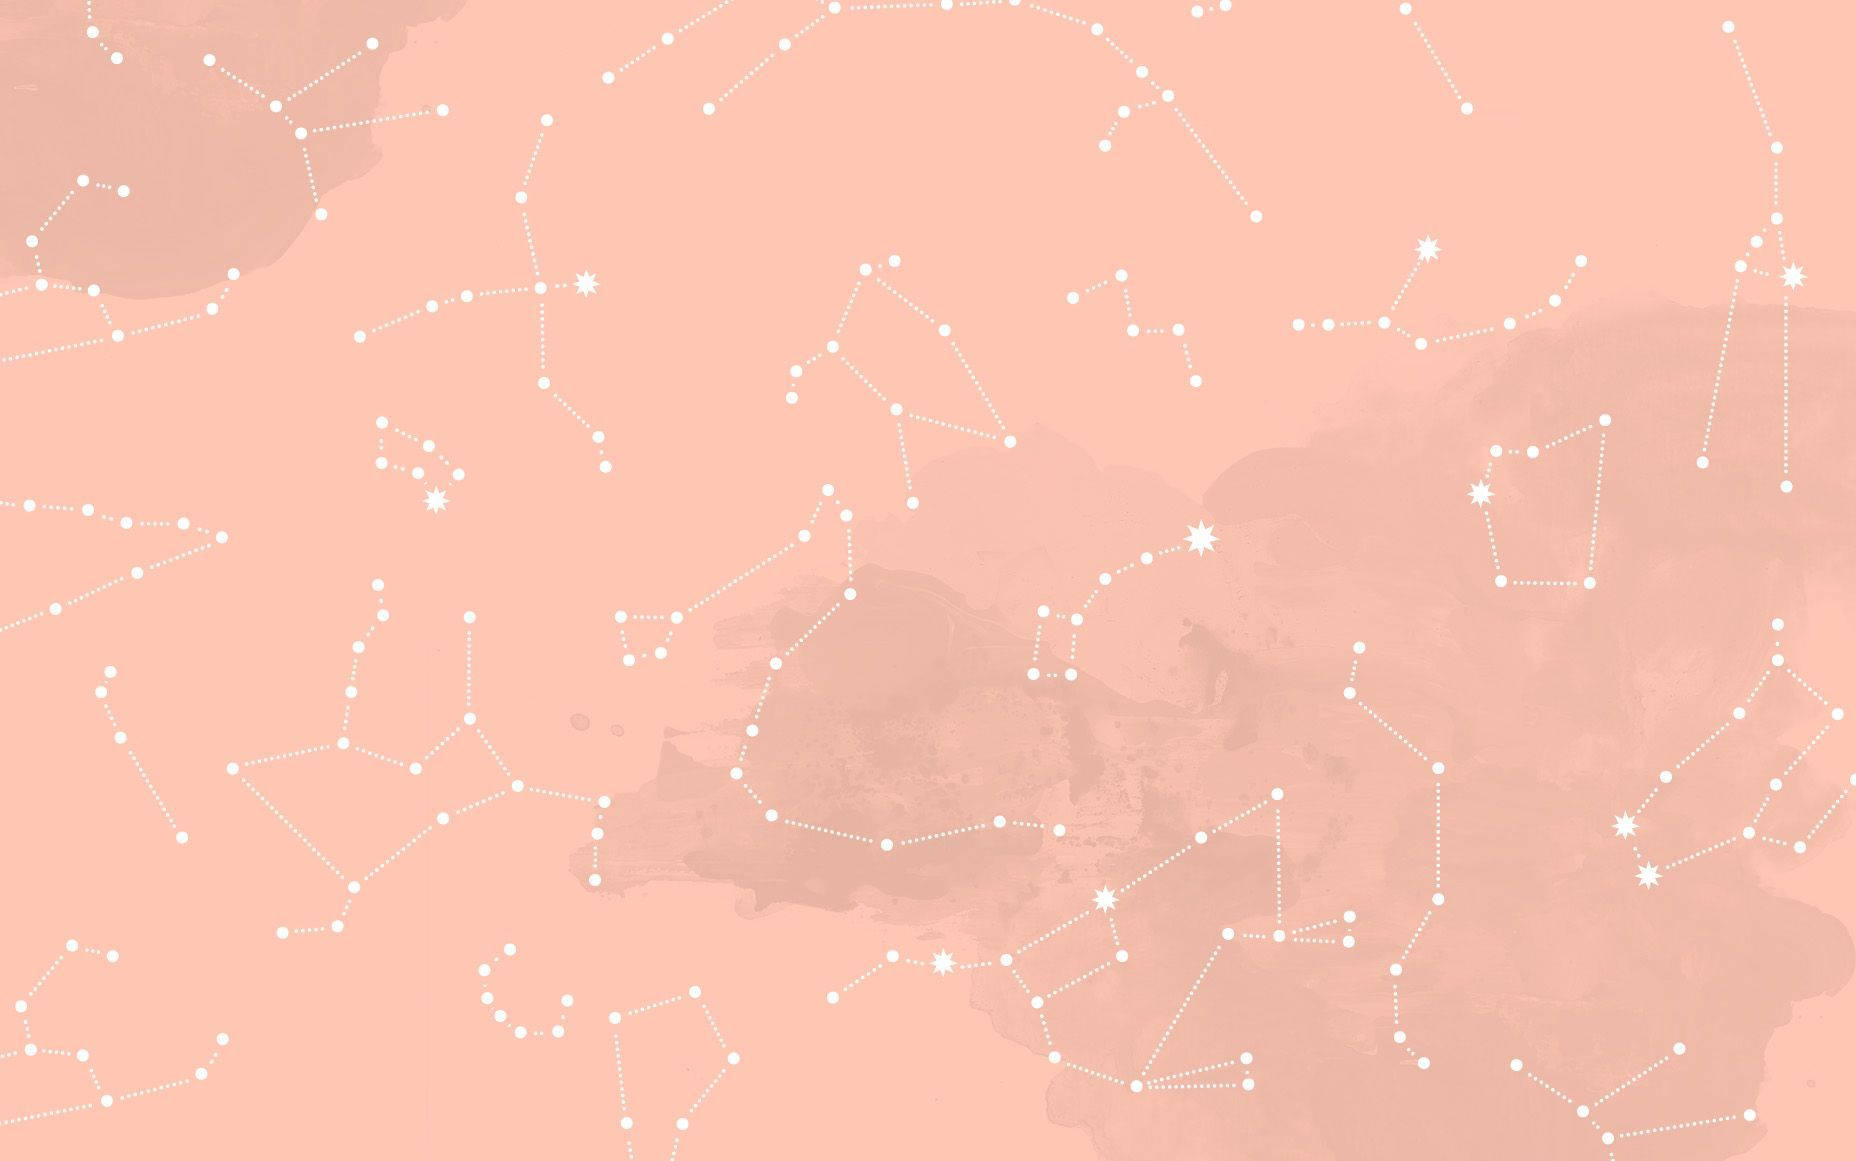 Beige Universe - An Aesthetic Interpretation Of Constellations On A Desktop Wallpaper